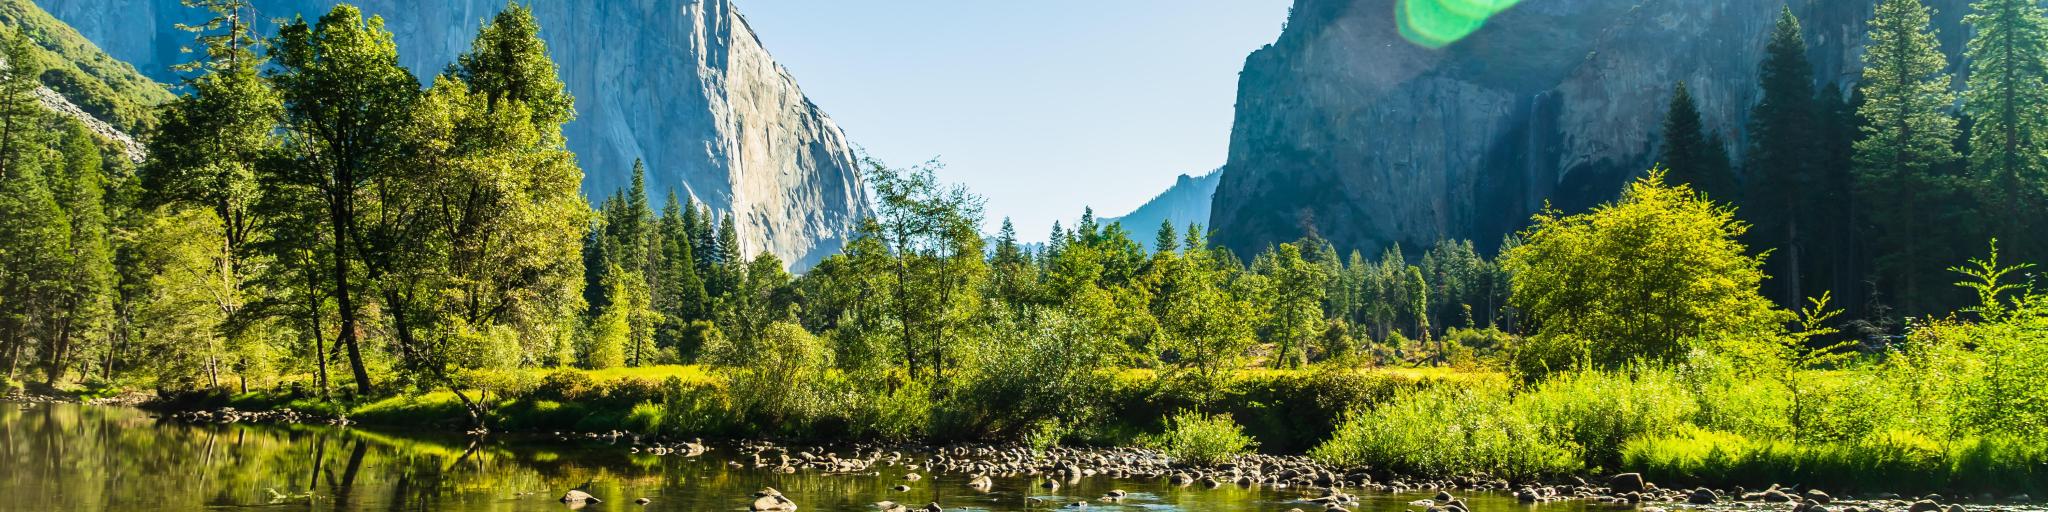 Yosemite, California, USA with a stunning view of the beautiful lake in Yosemite National Park.